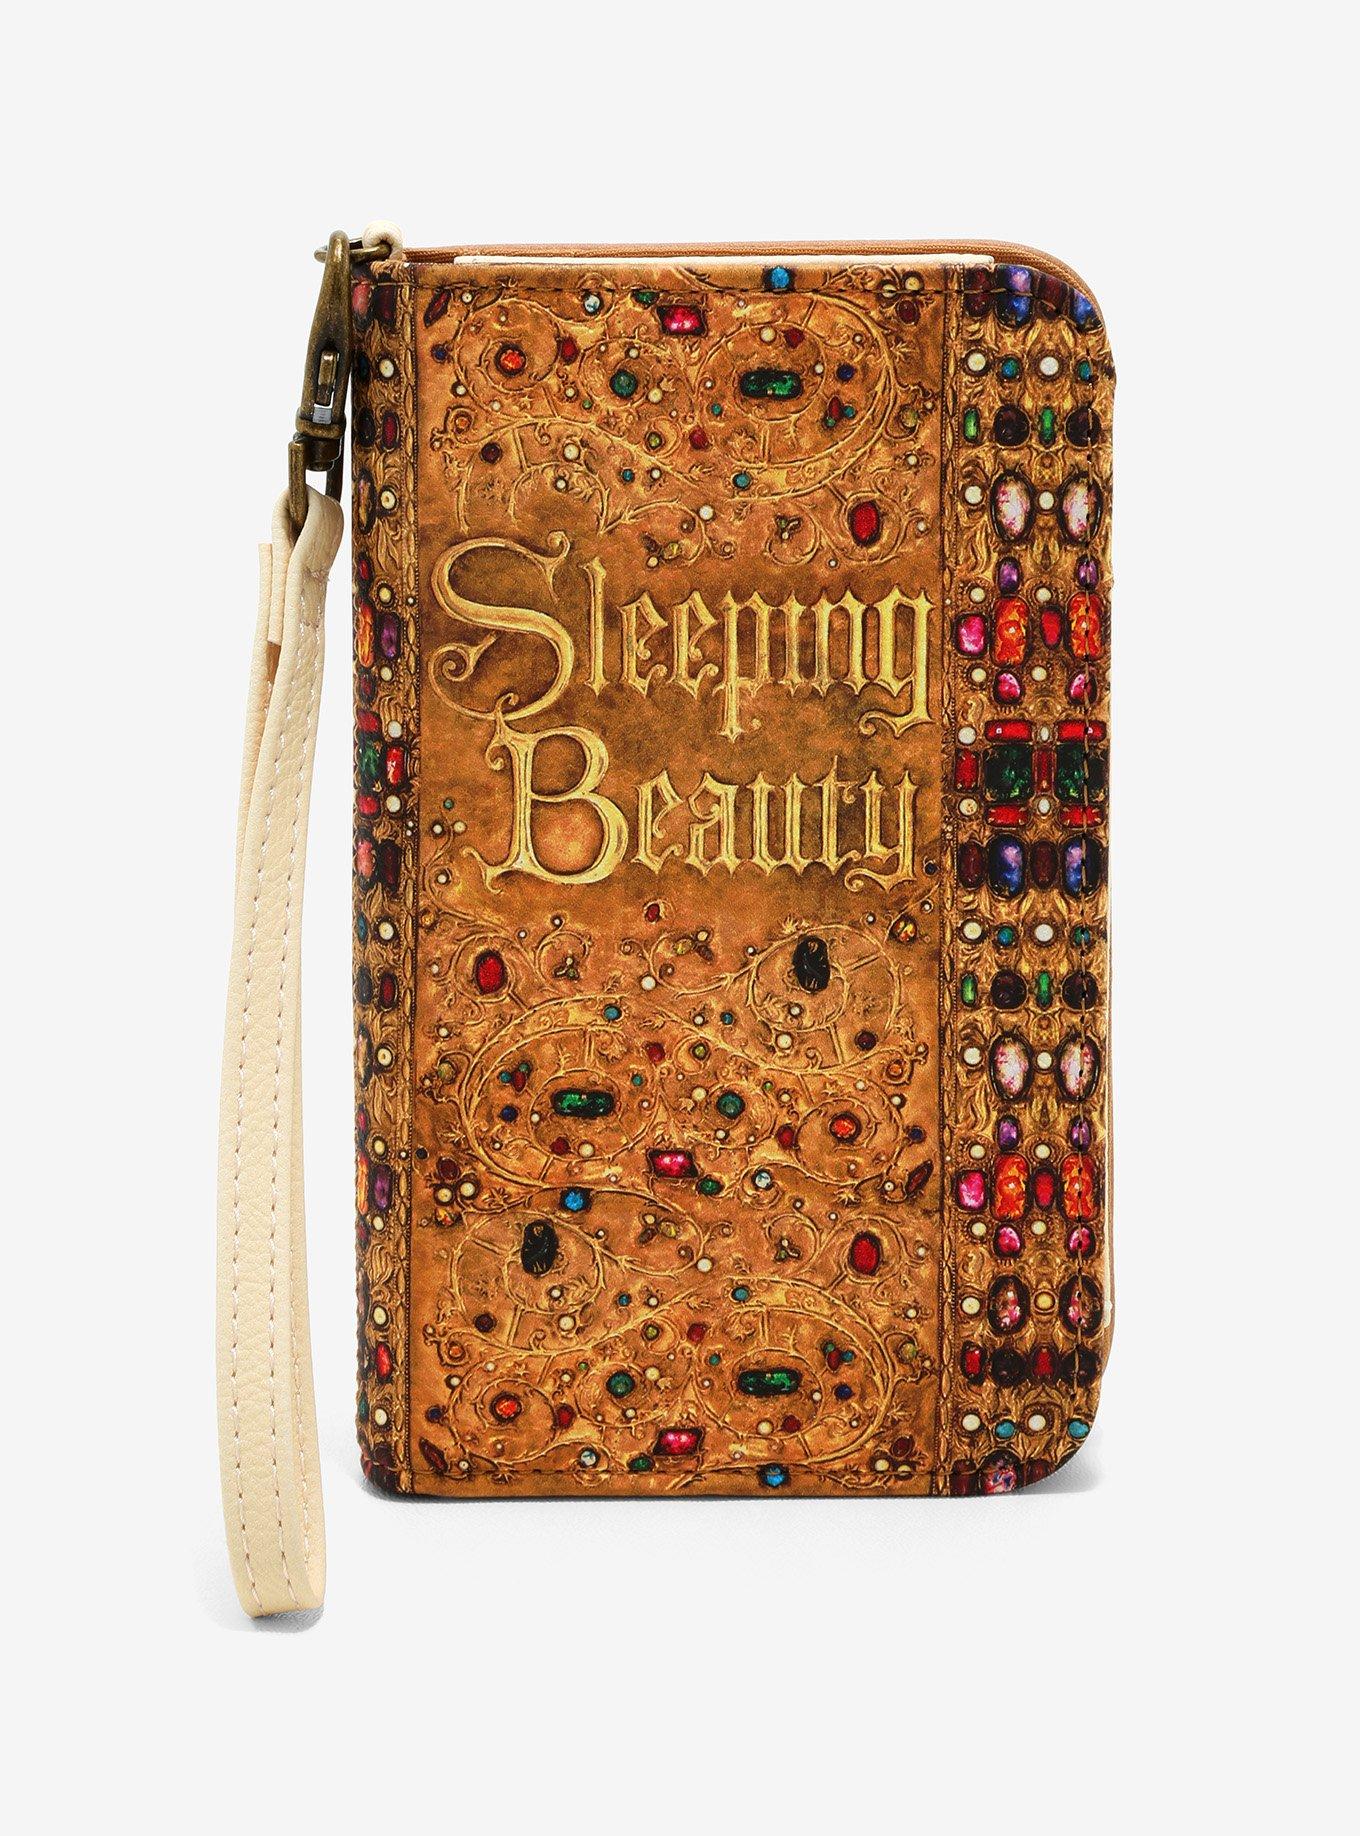 sleeping beauty loungefly wallet